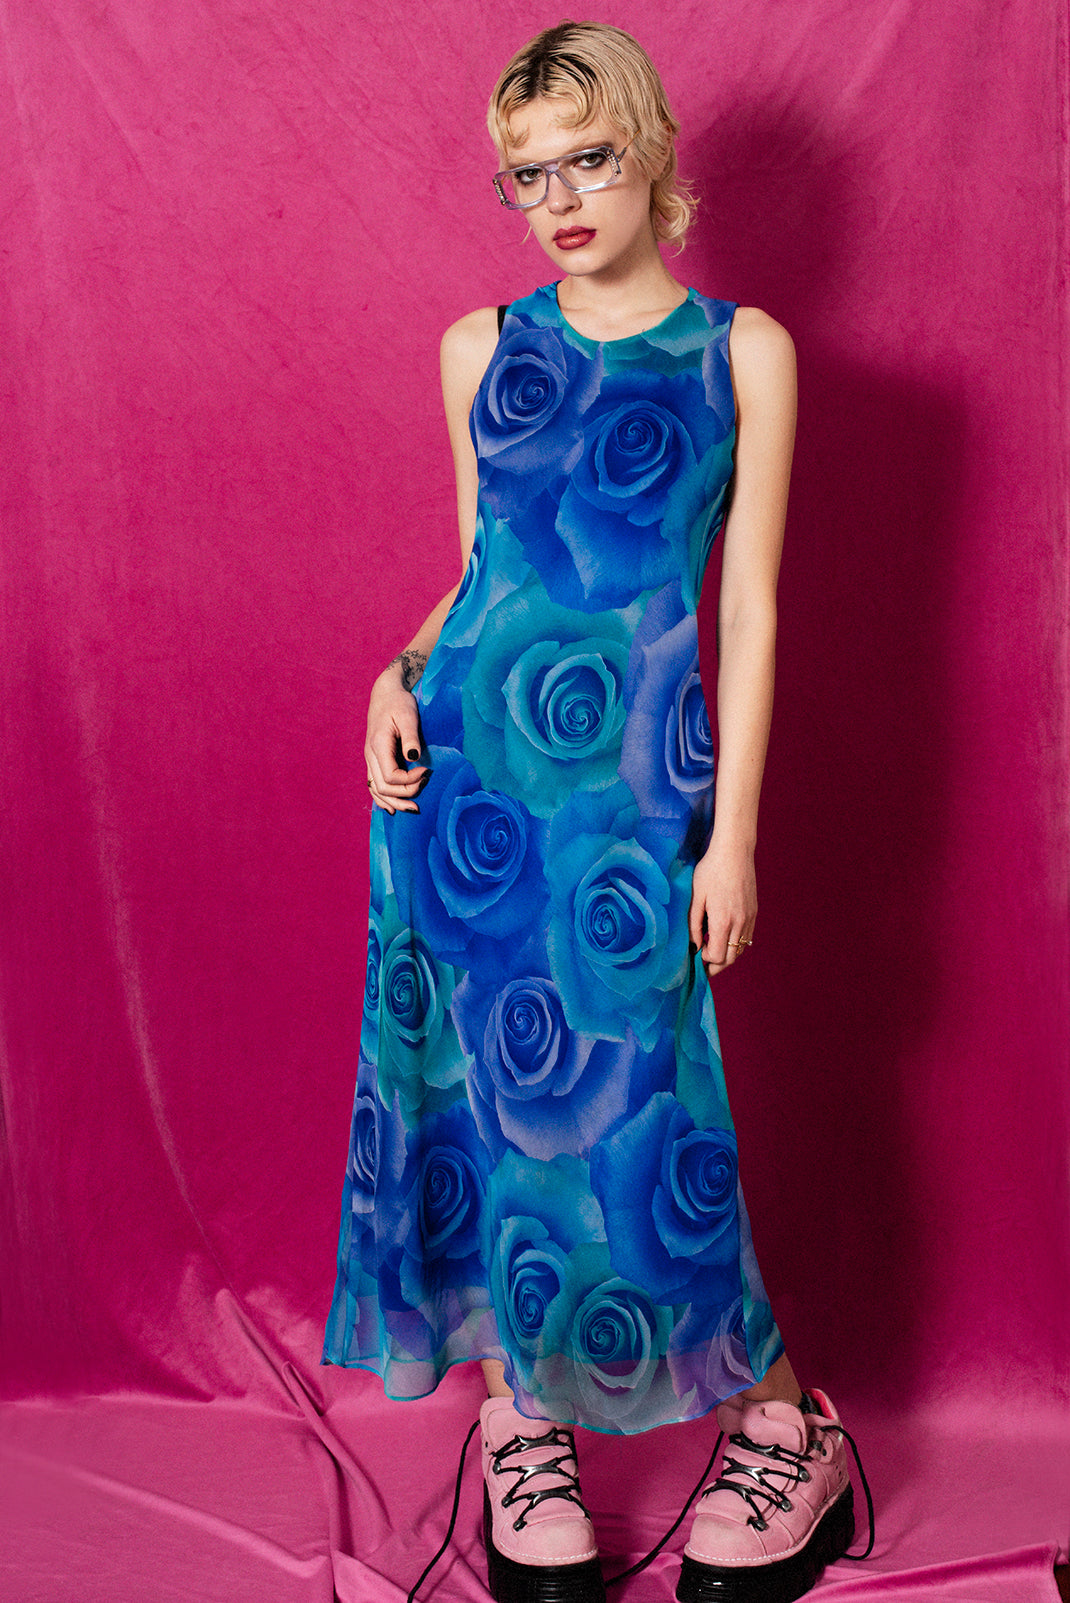 Blue roses dress.